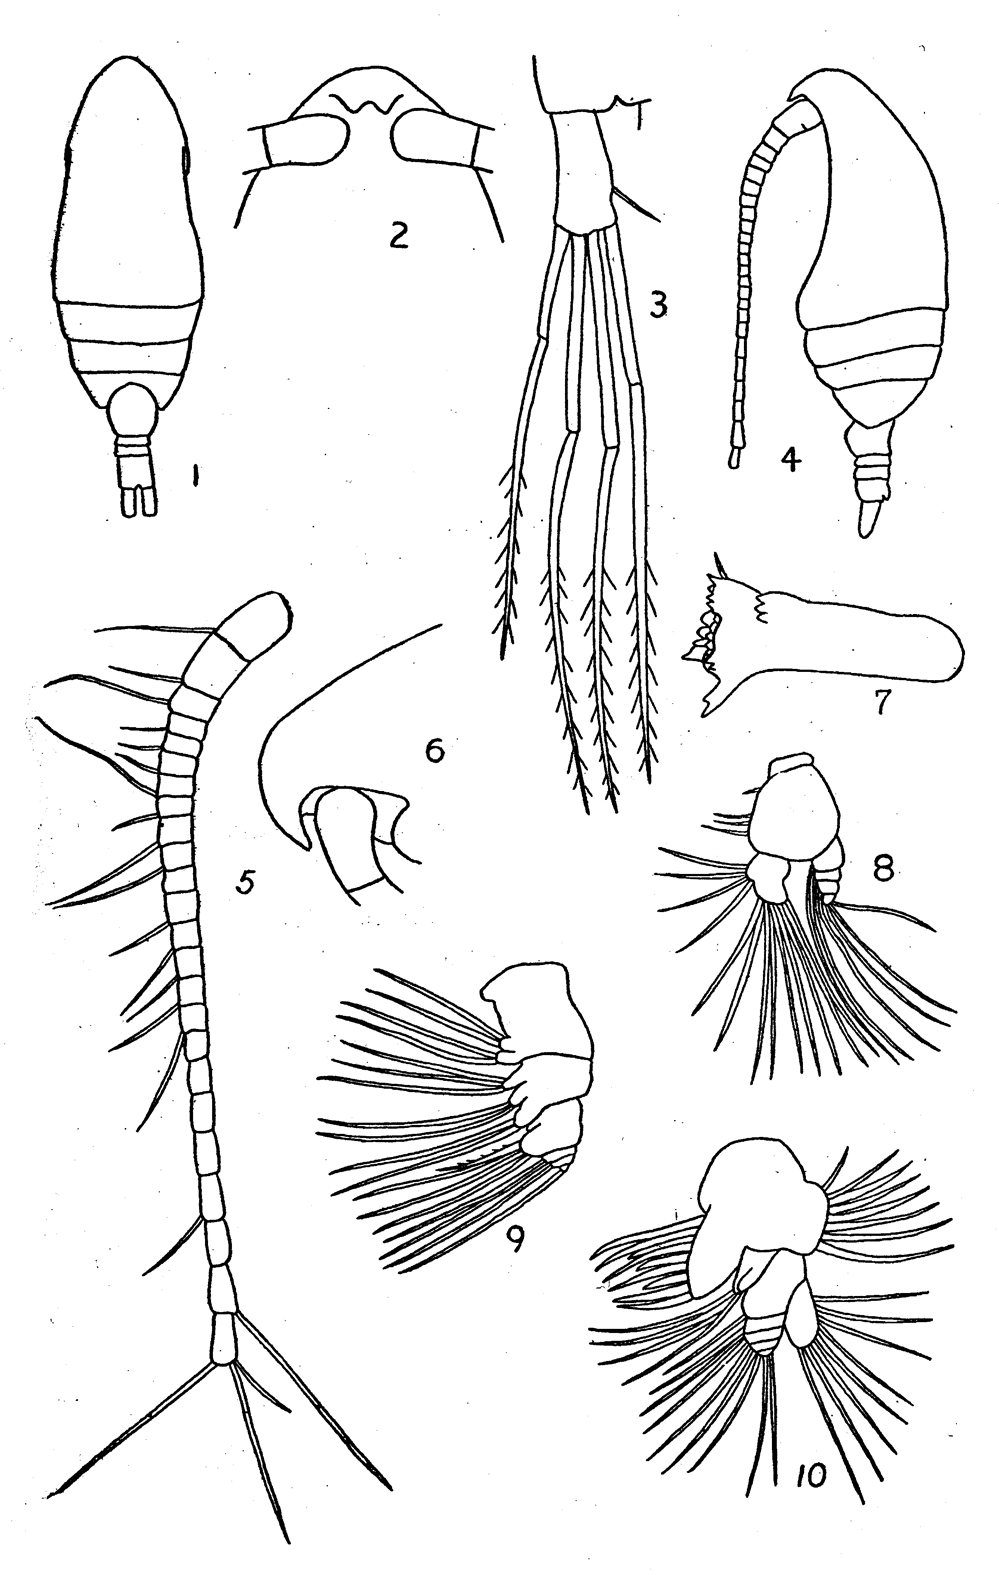 Species Parvocalanus crassirostris - Plate 16 of morphological figures